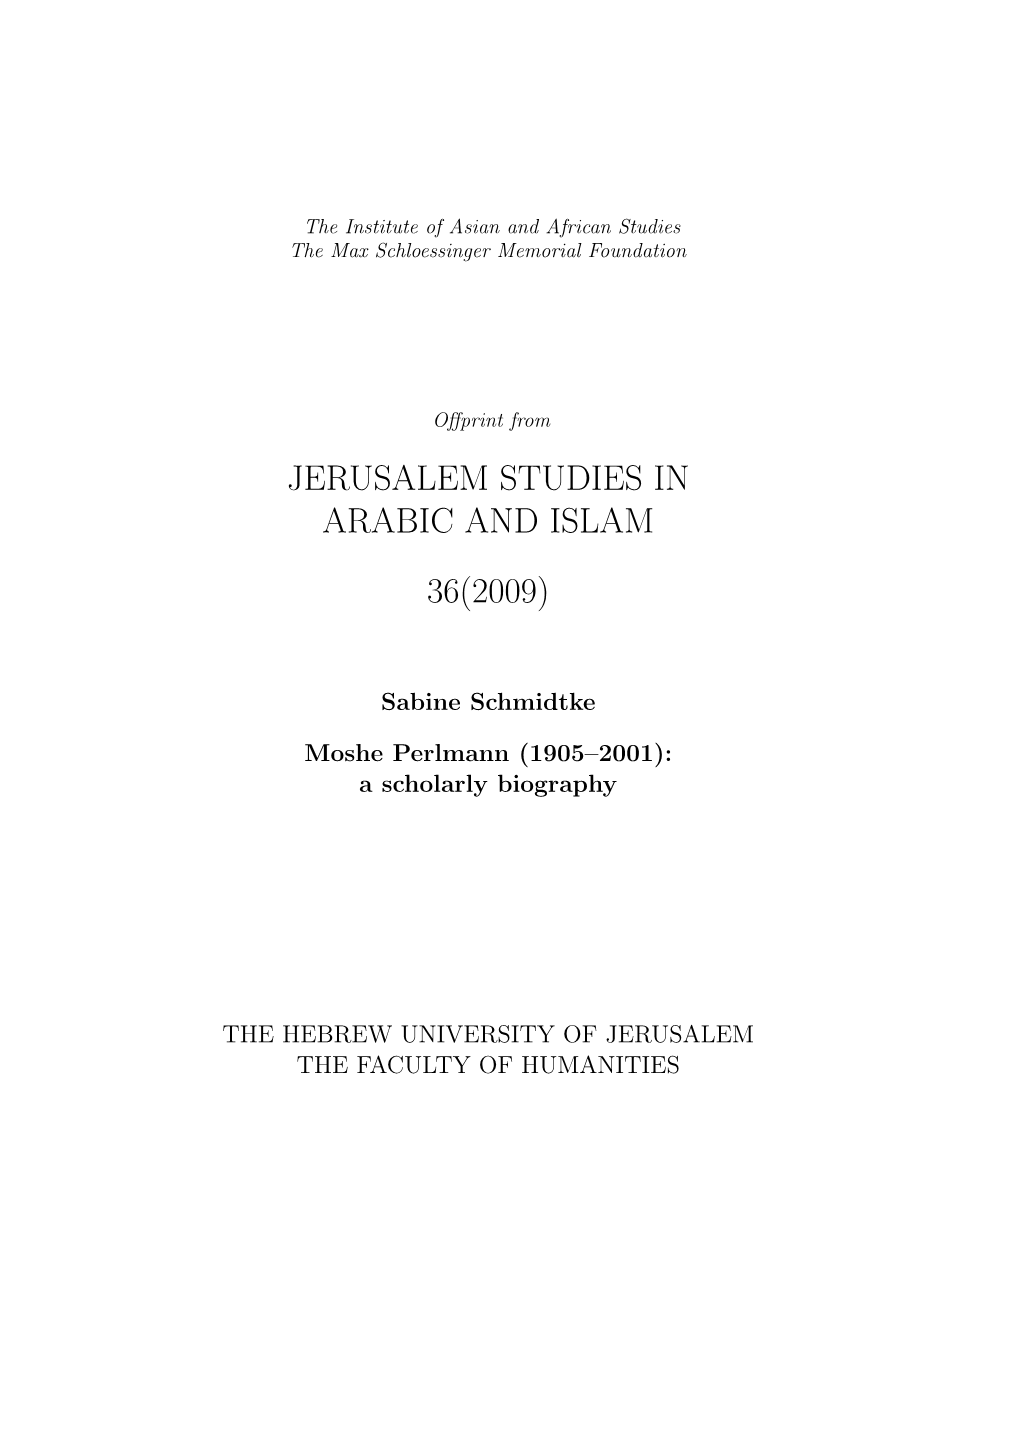 Jerusalem Studies in Arabic and Islam 36(2009)